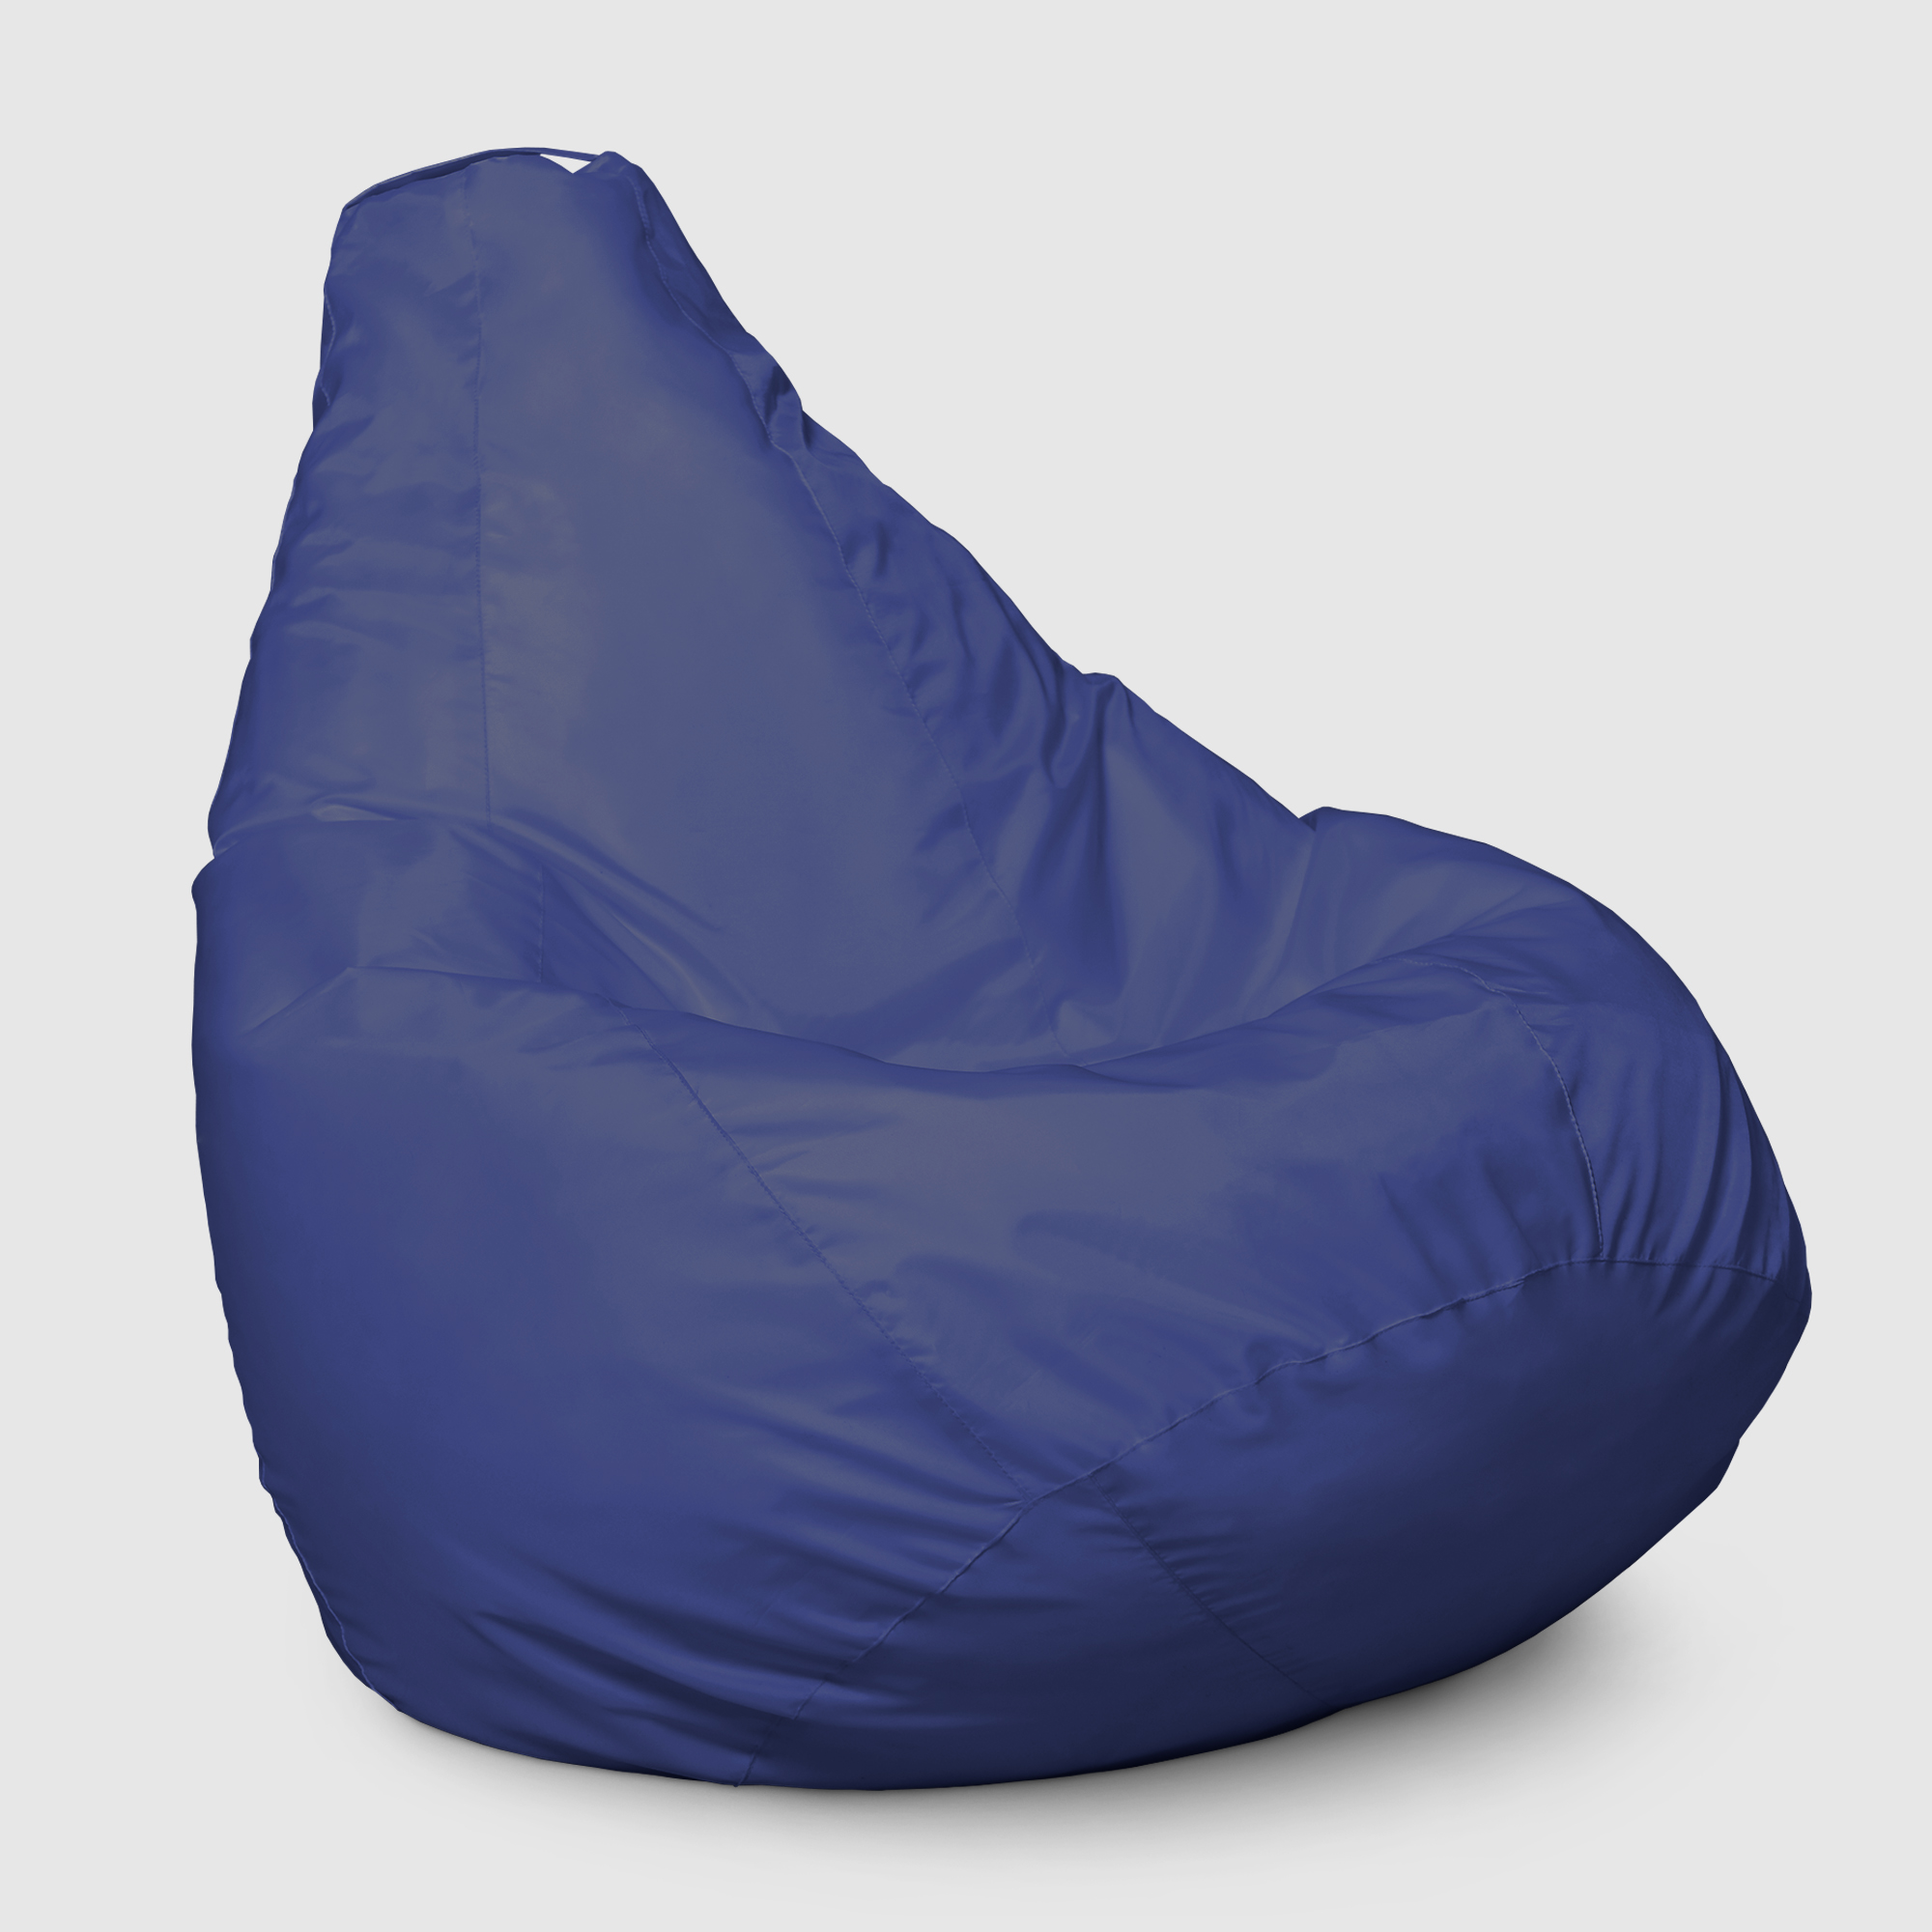 Кресло мешок Dreambag Меган xl темно-синее 85х85х125 см кресло мешок dreambag меган xl лайм 85х85х125см